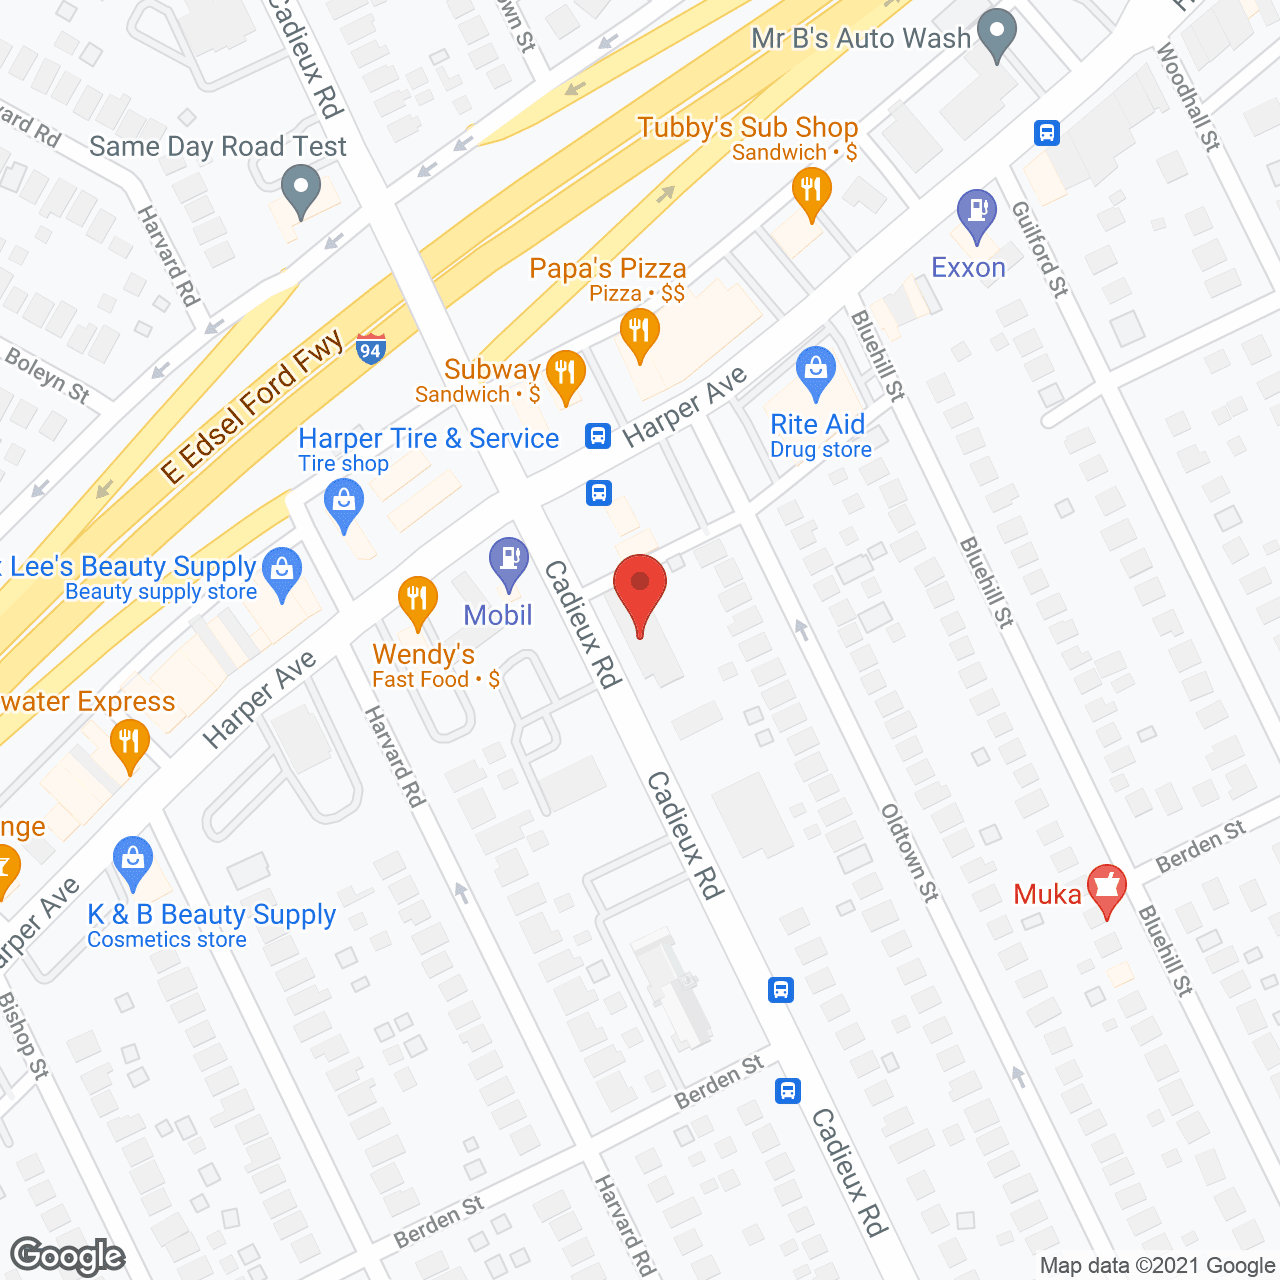 Parkeast Healthcare Center in google map